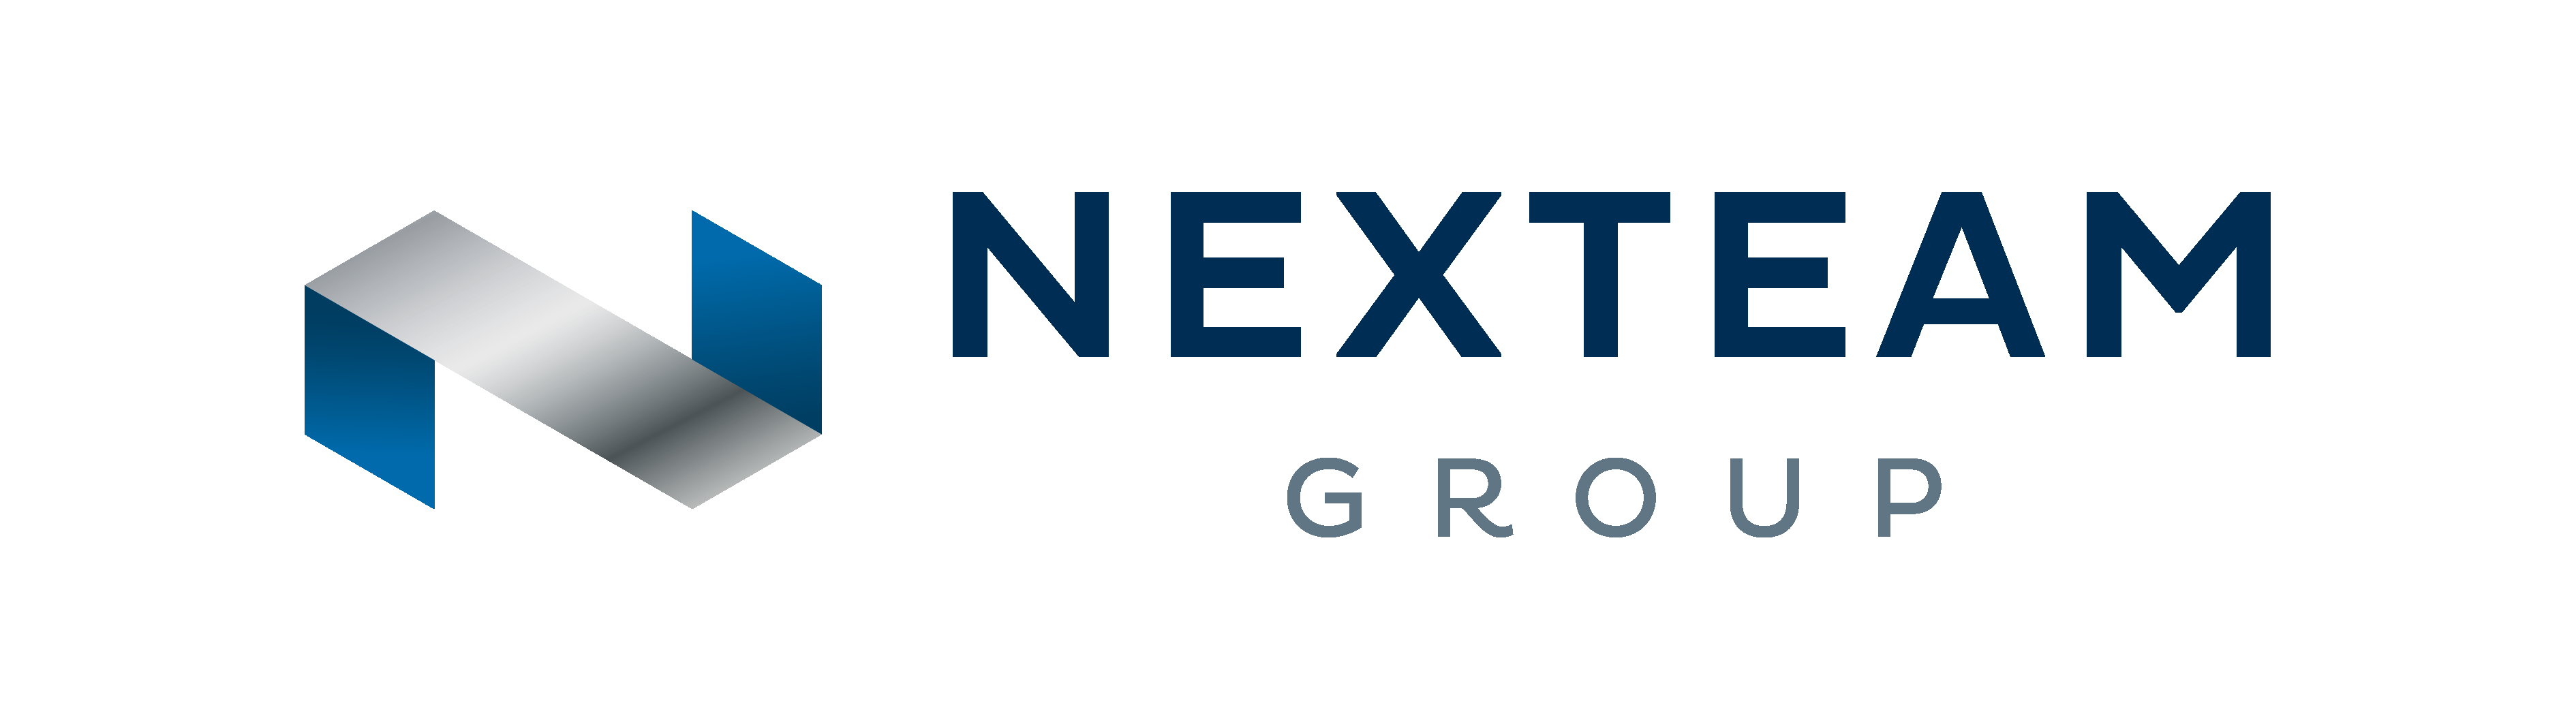 NEXTEAM Group